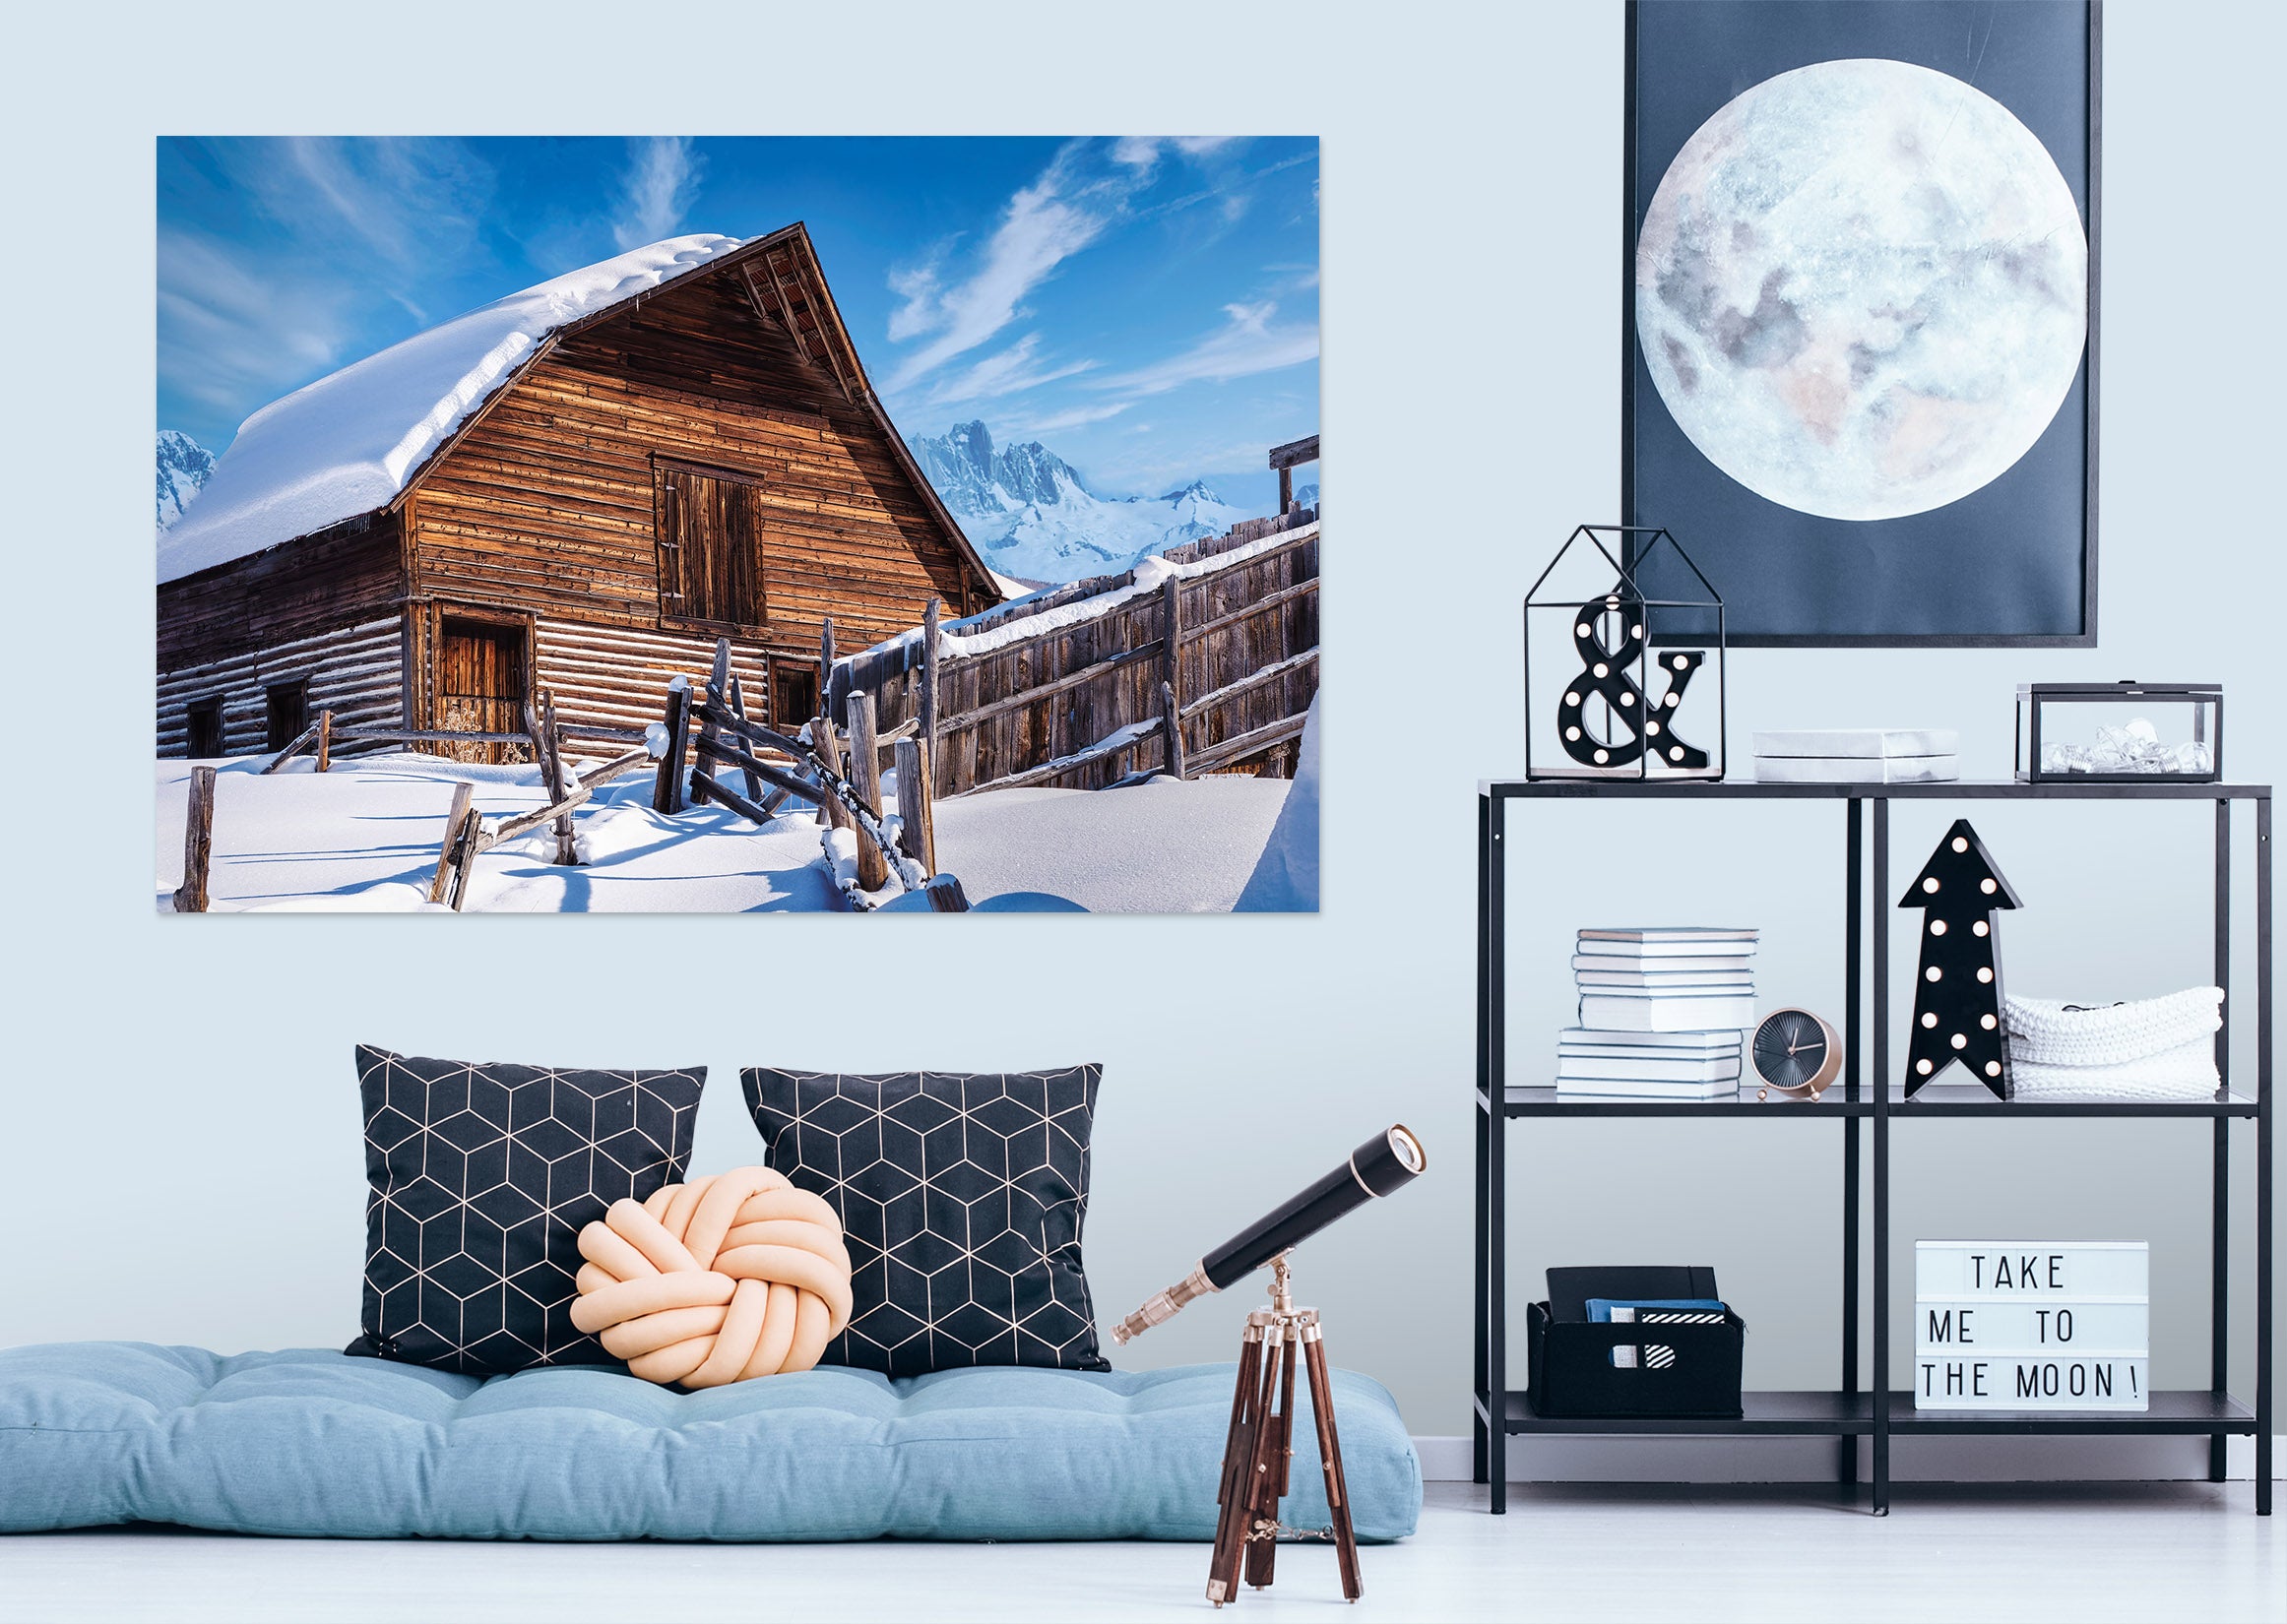 3D Winter Snow House 4056 Beth Sheridan Wall Sticker